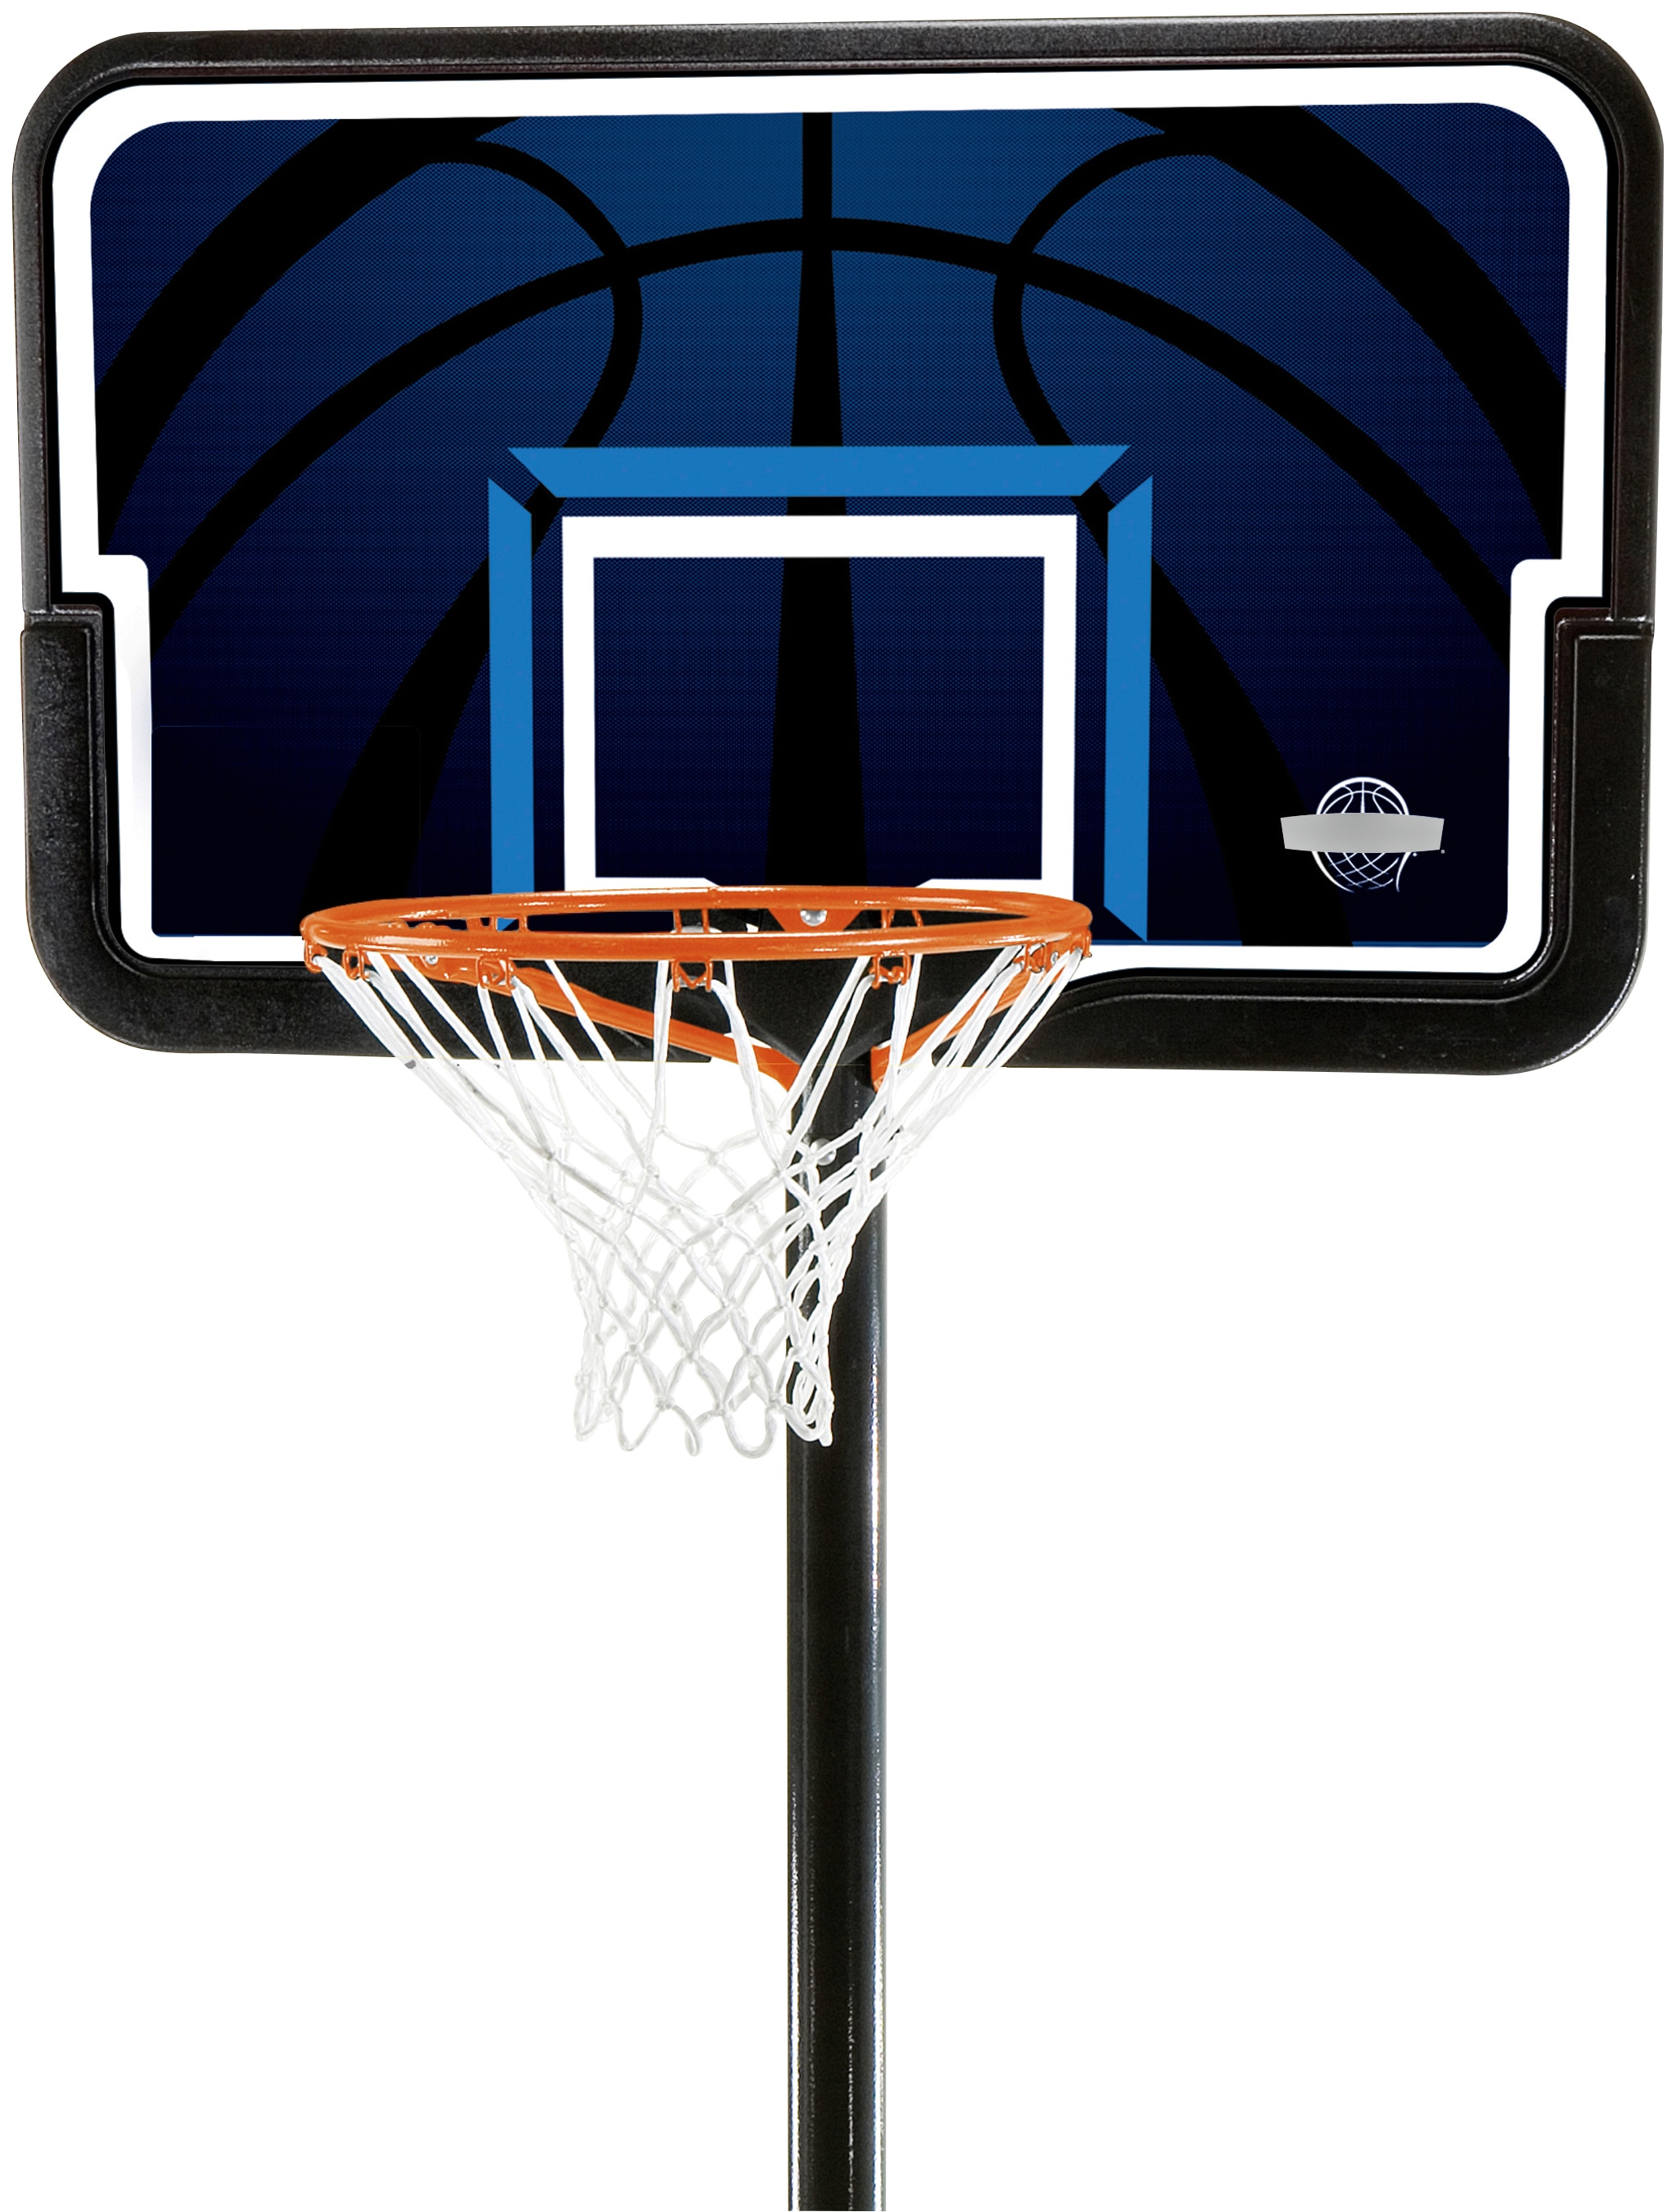 50NRTH Basketballkorb »Nevada«, höhenverstellbar BAUR | schwarz/blau